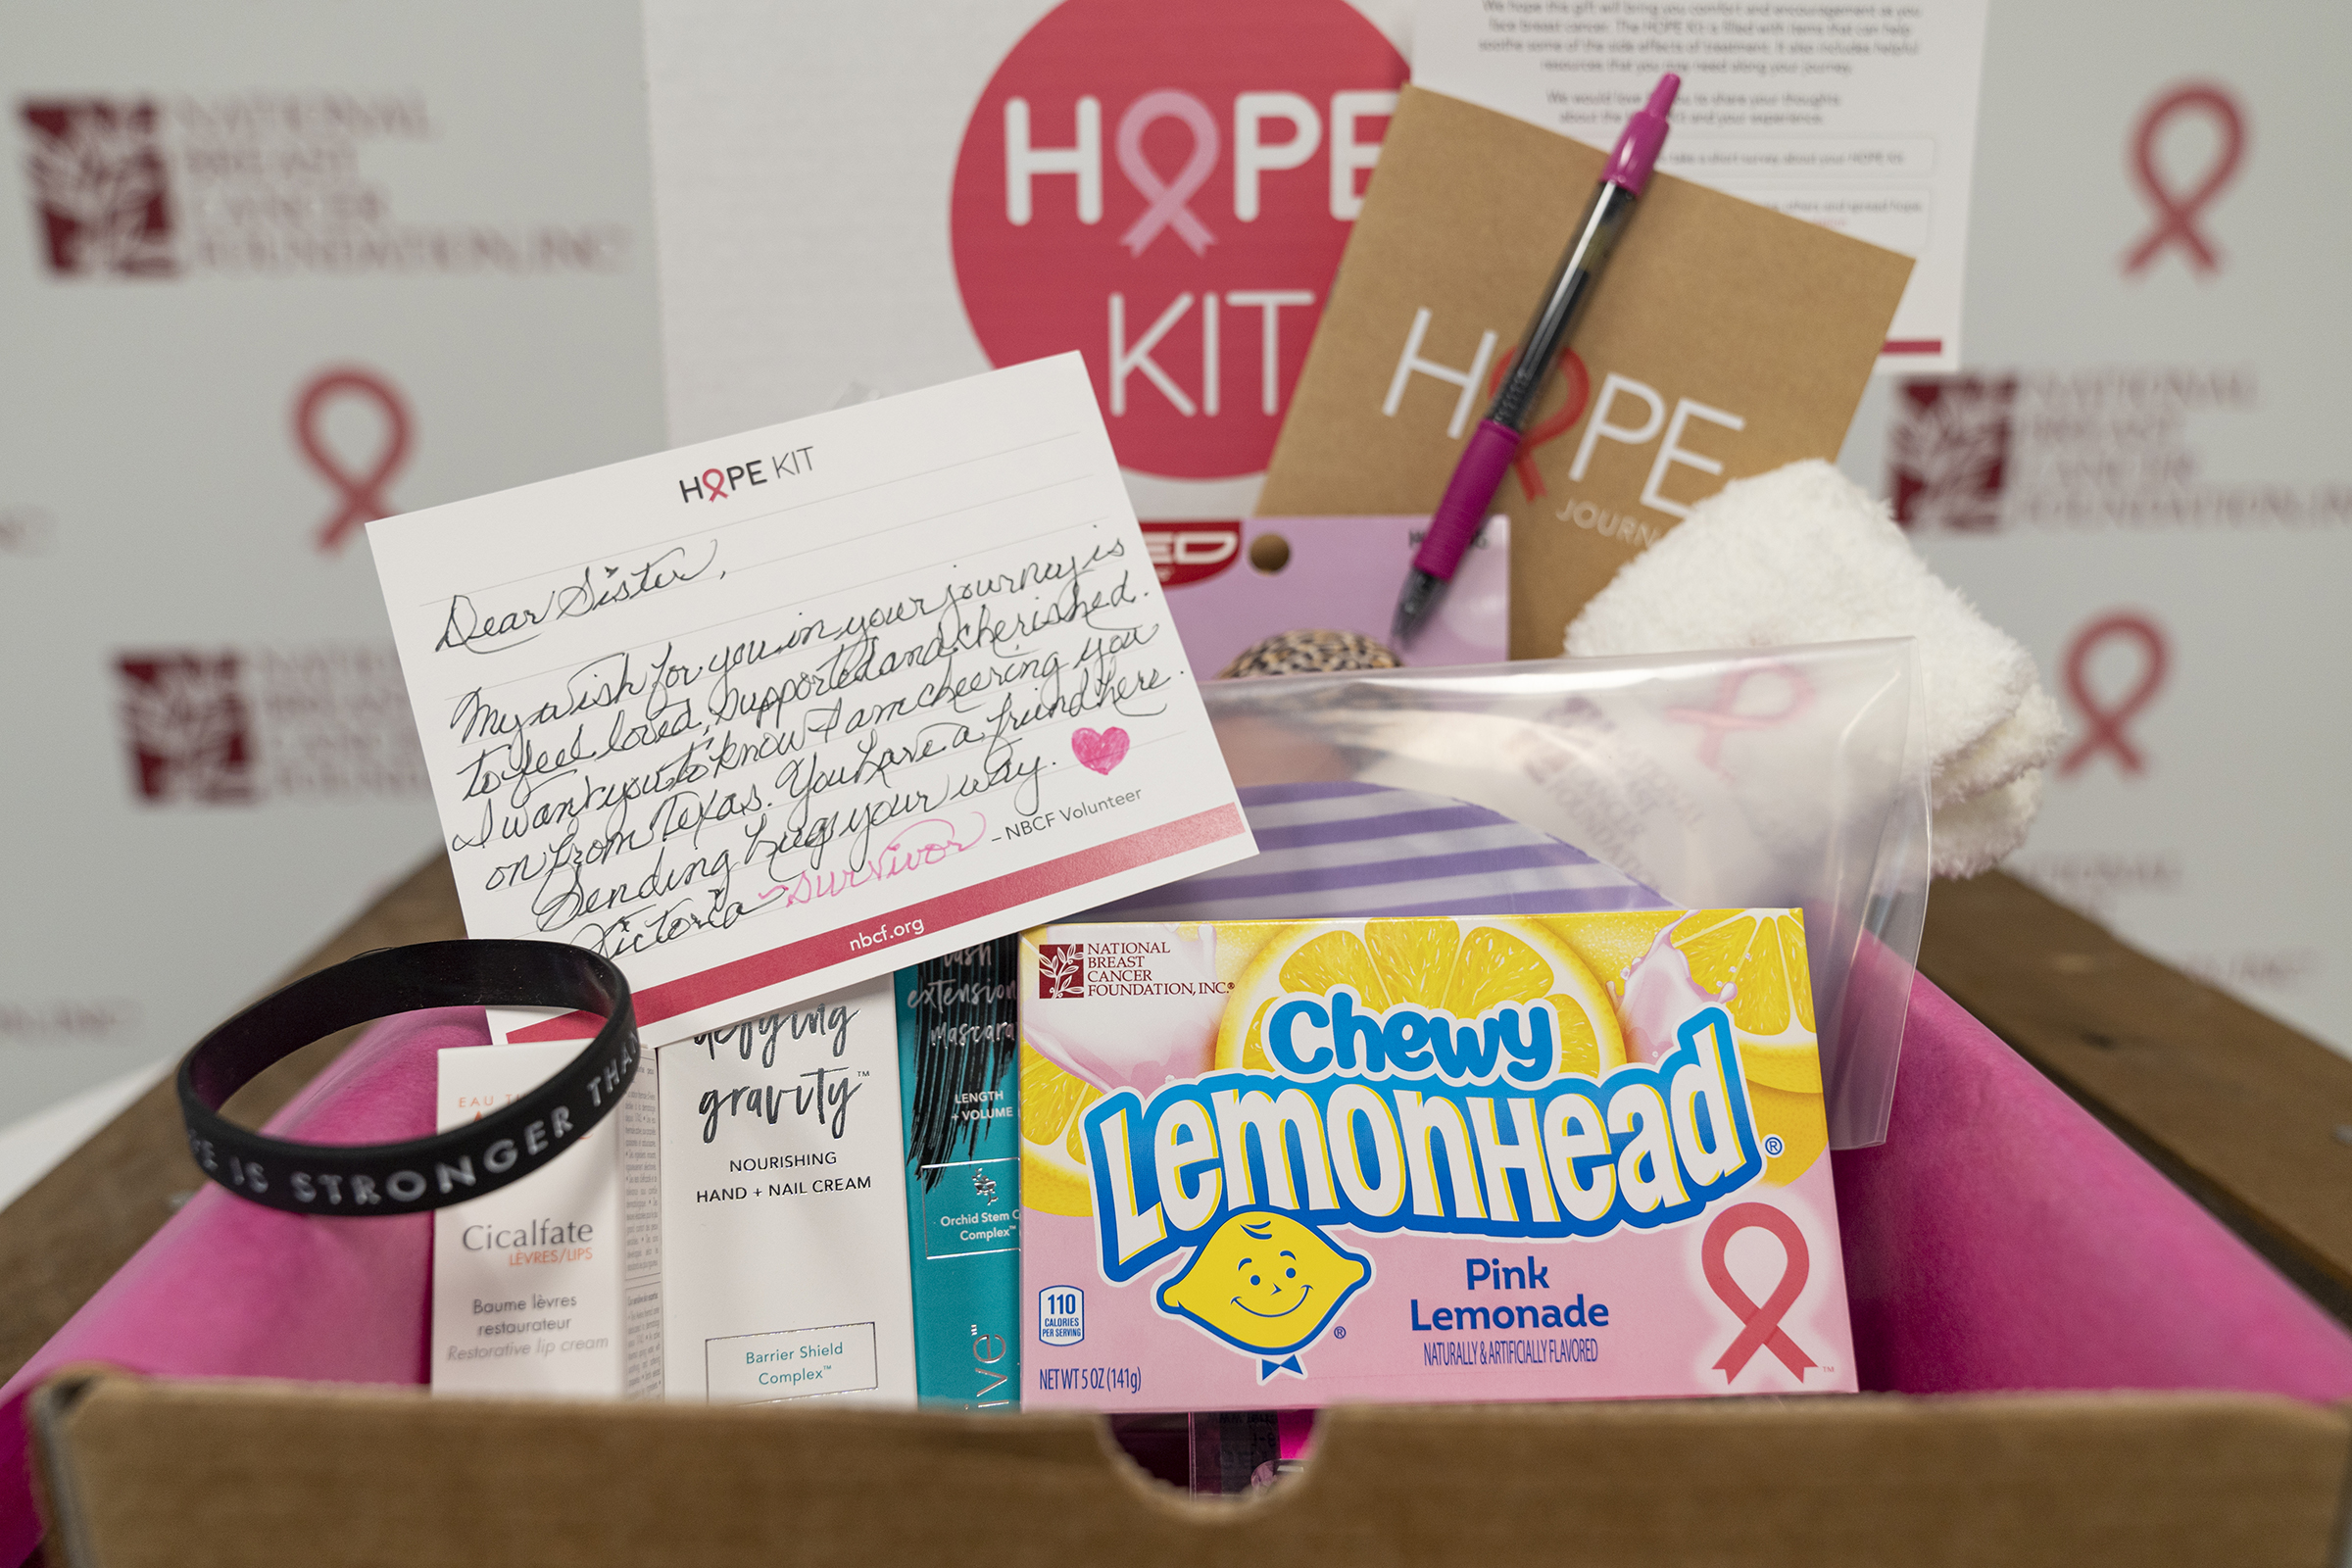 National Breast Cancer Foundation Hope Kit